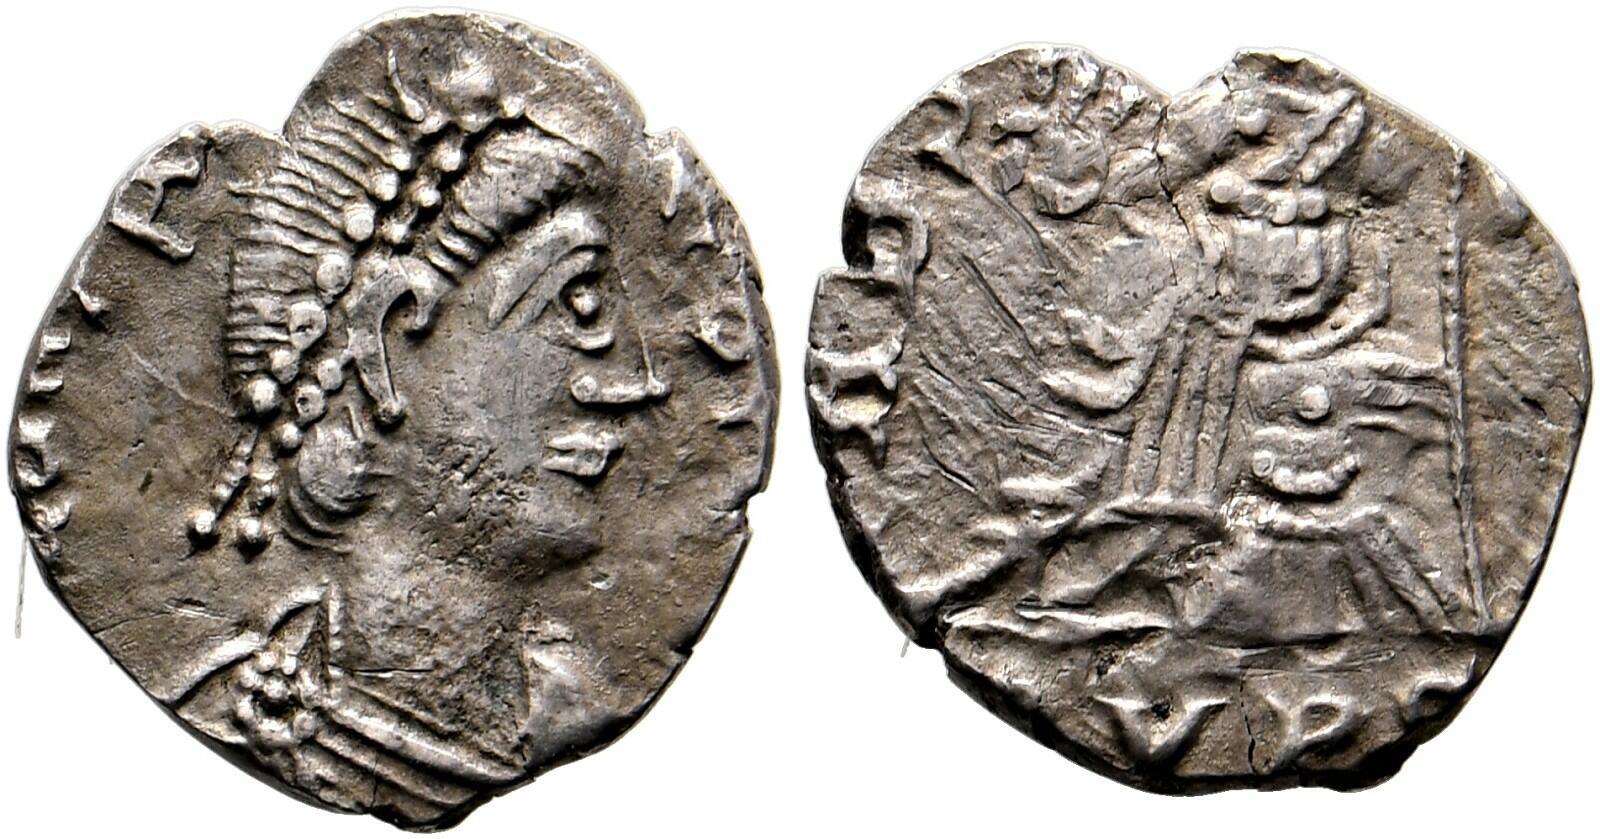 20.10.20: Medieval Coins - Migration Period - Vandals